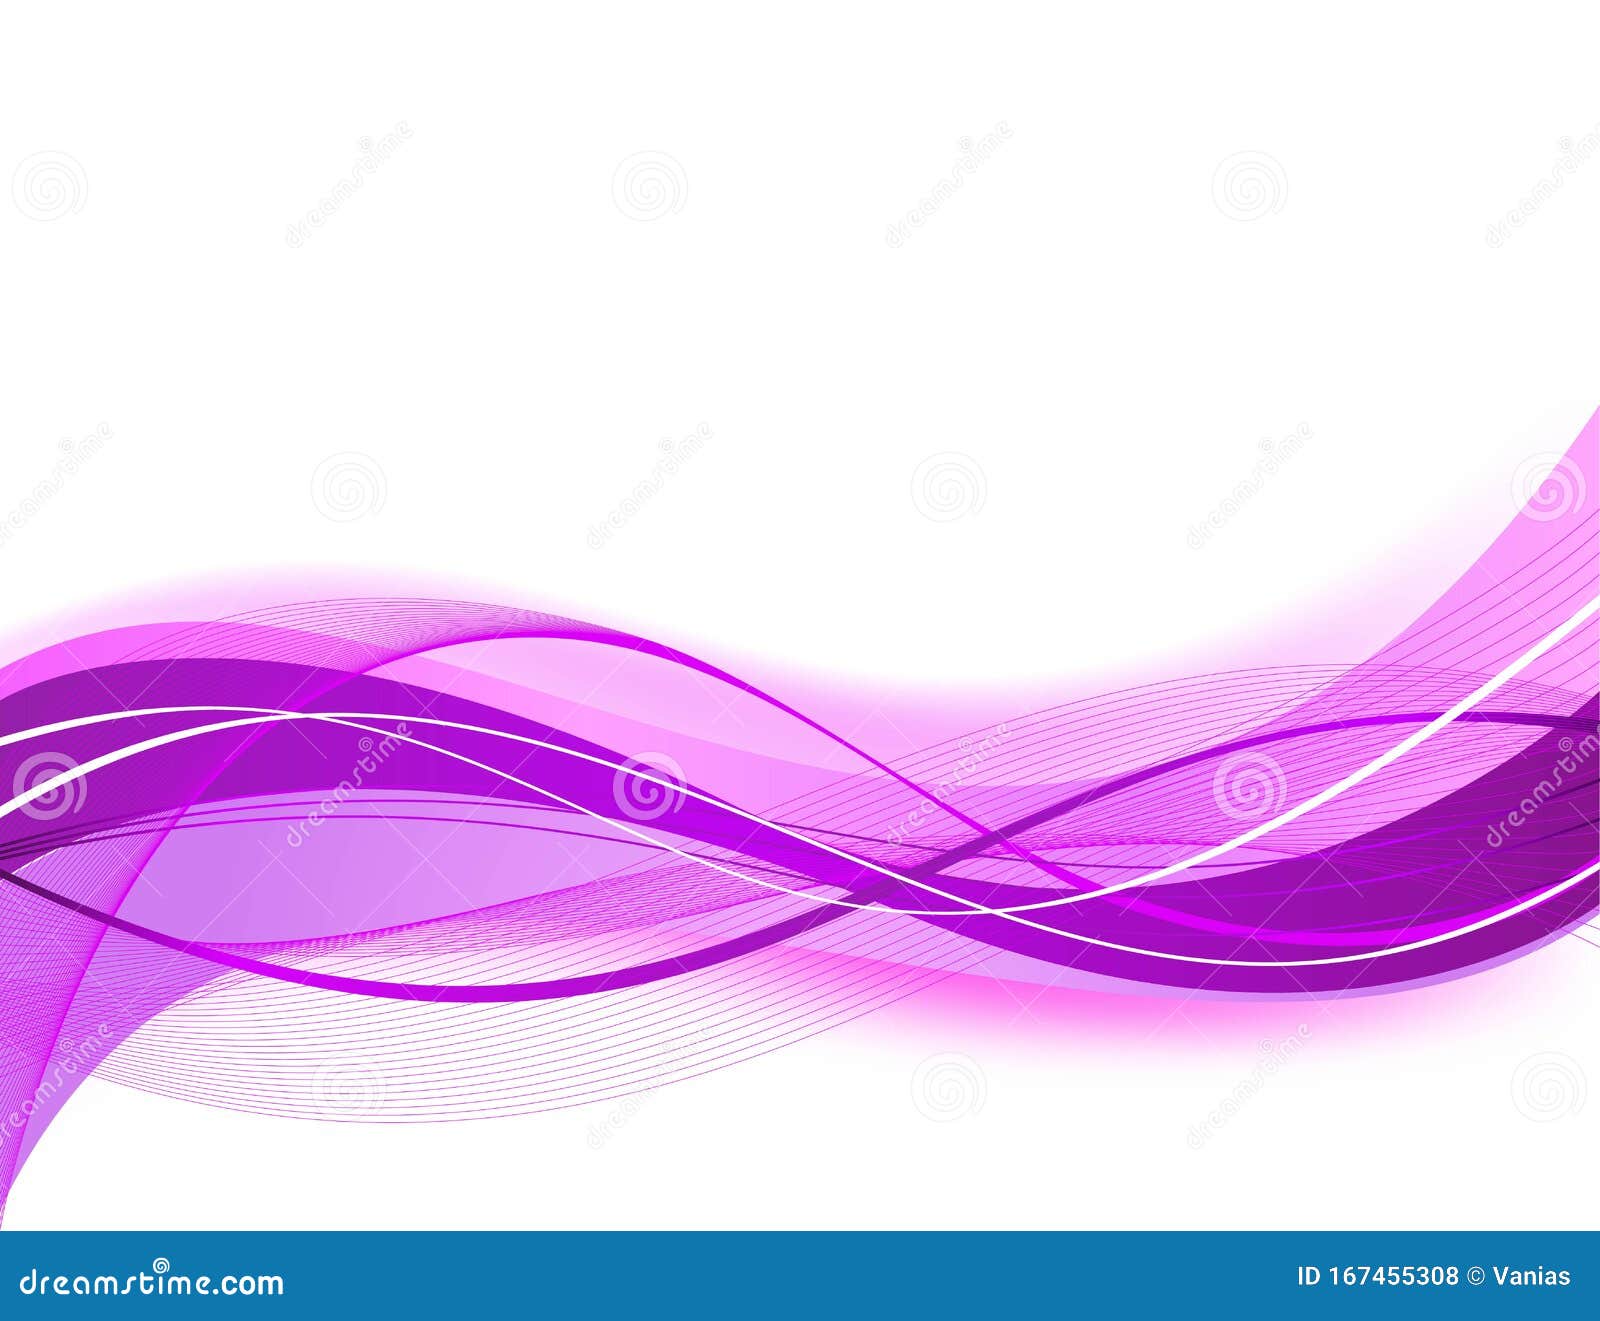 Abstract Vector Background Illustration Art Design Pink Purple ...